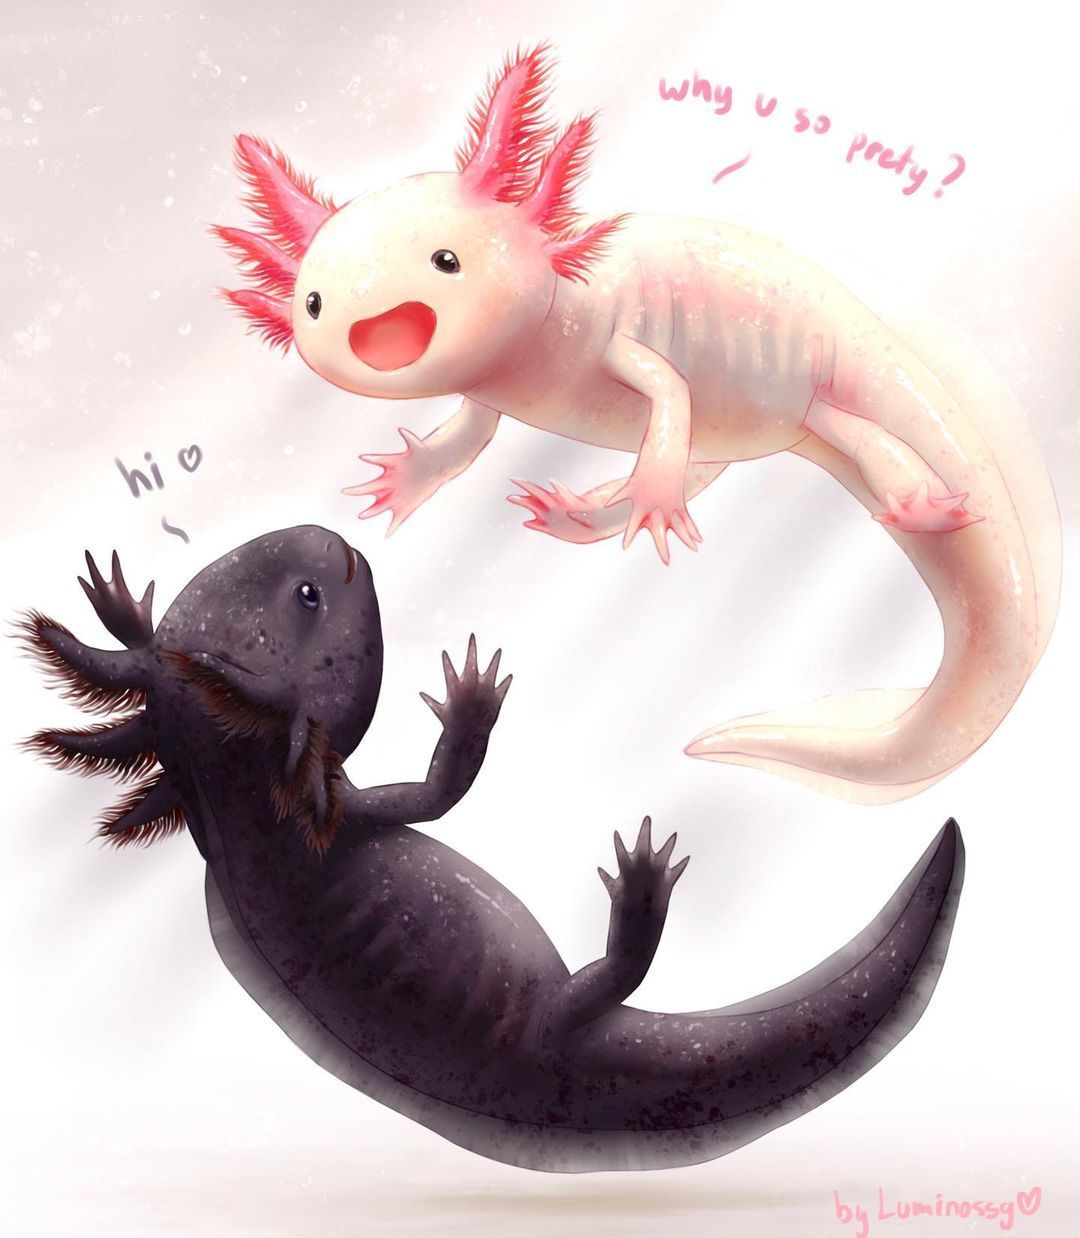 A black axolotl is asking a pink axolotl why it's so round. - Axolotl